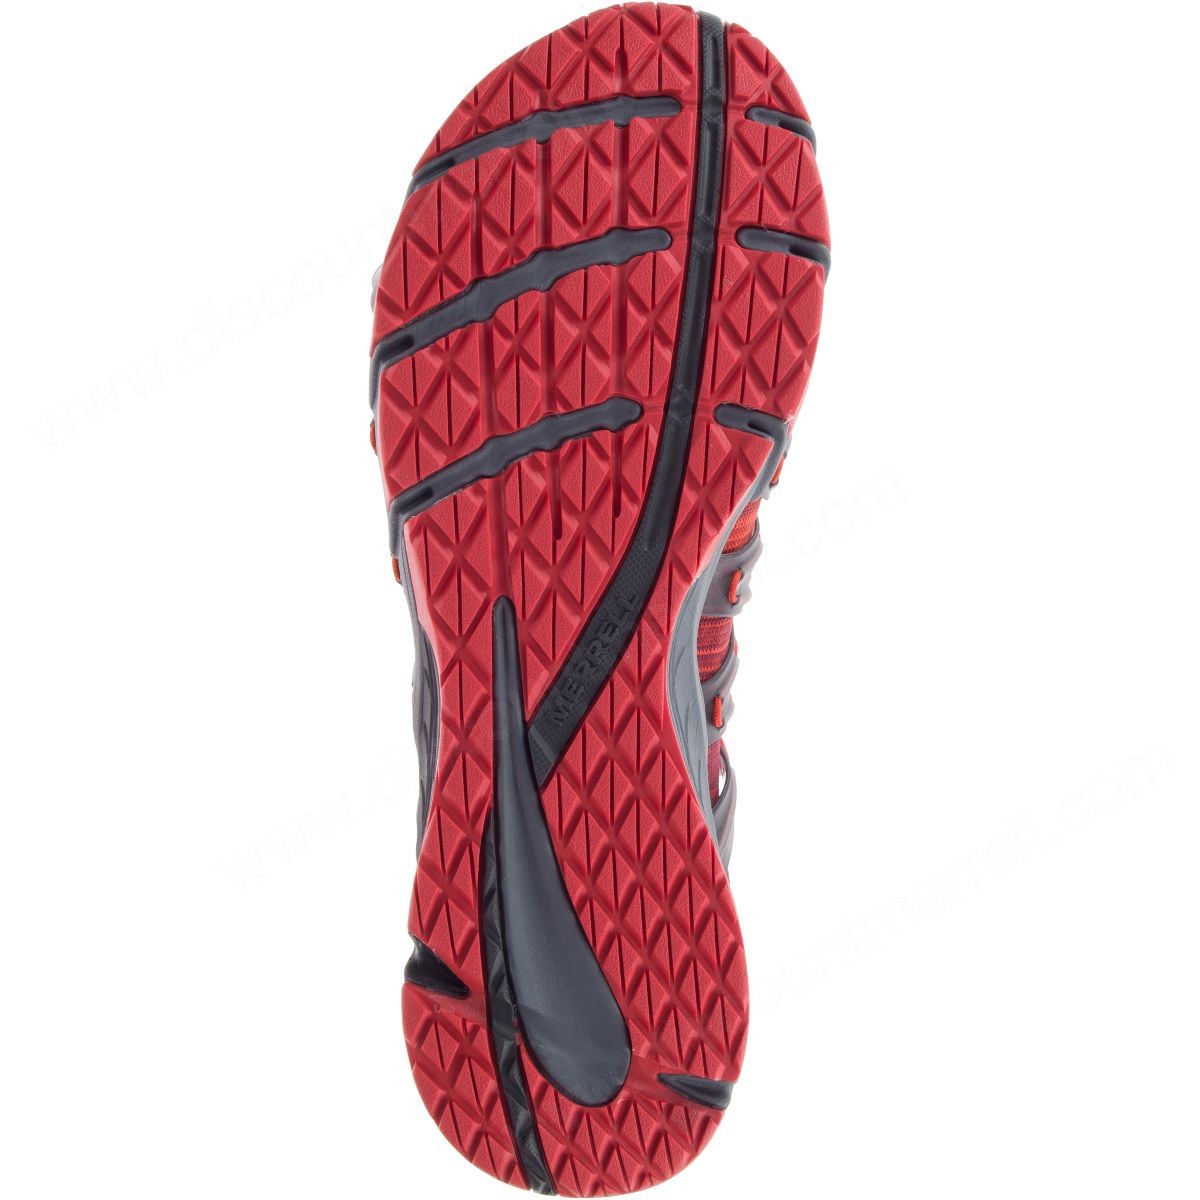 Merrell Mens's Bare Access Flex Knit Red - -1